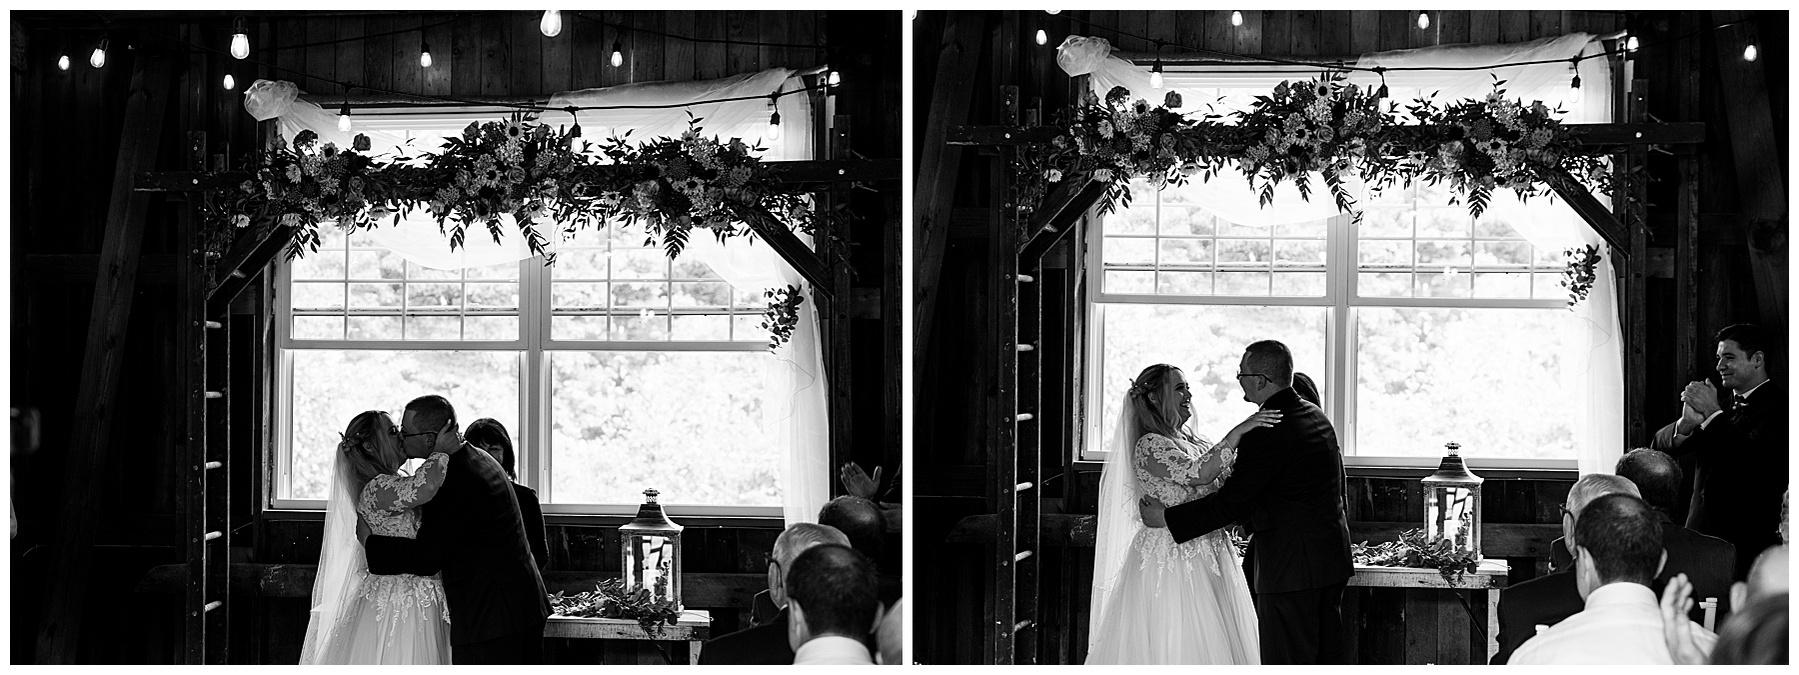 Rustic Meadow Farms Wedding Photography, Pittsburgh wedding photographer